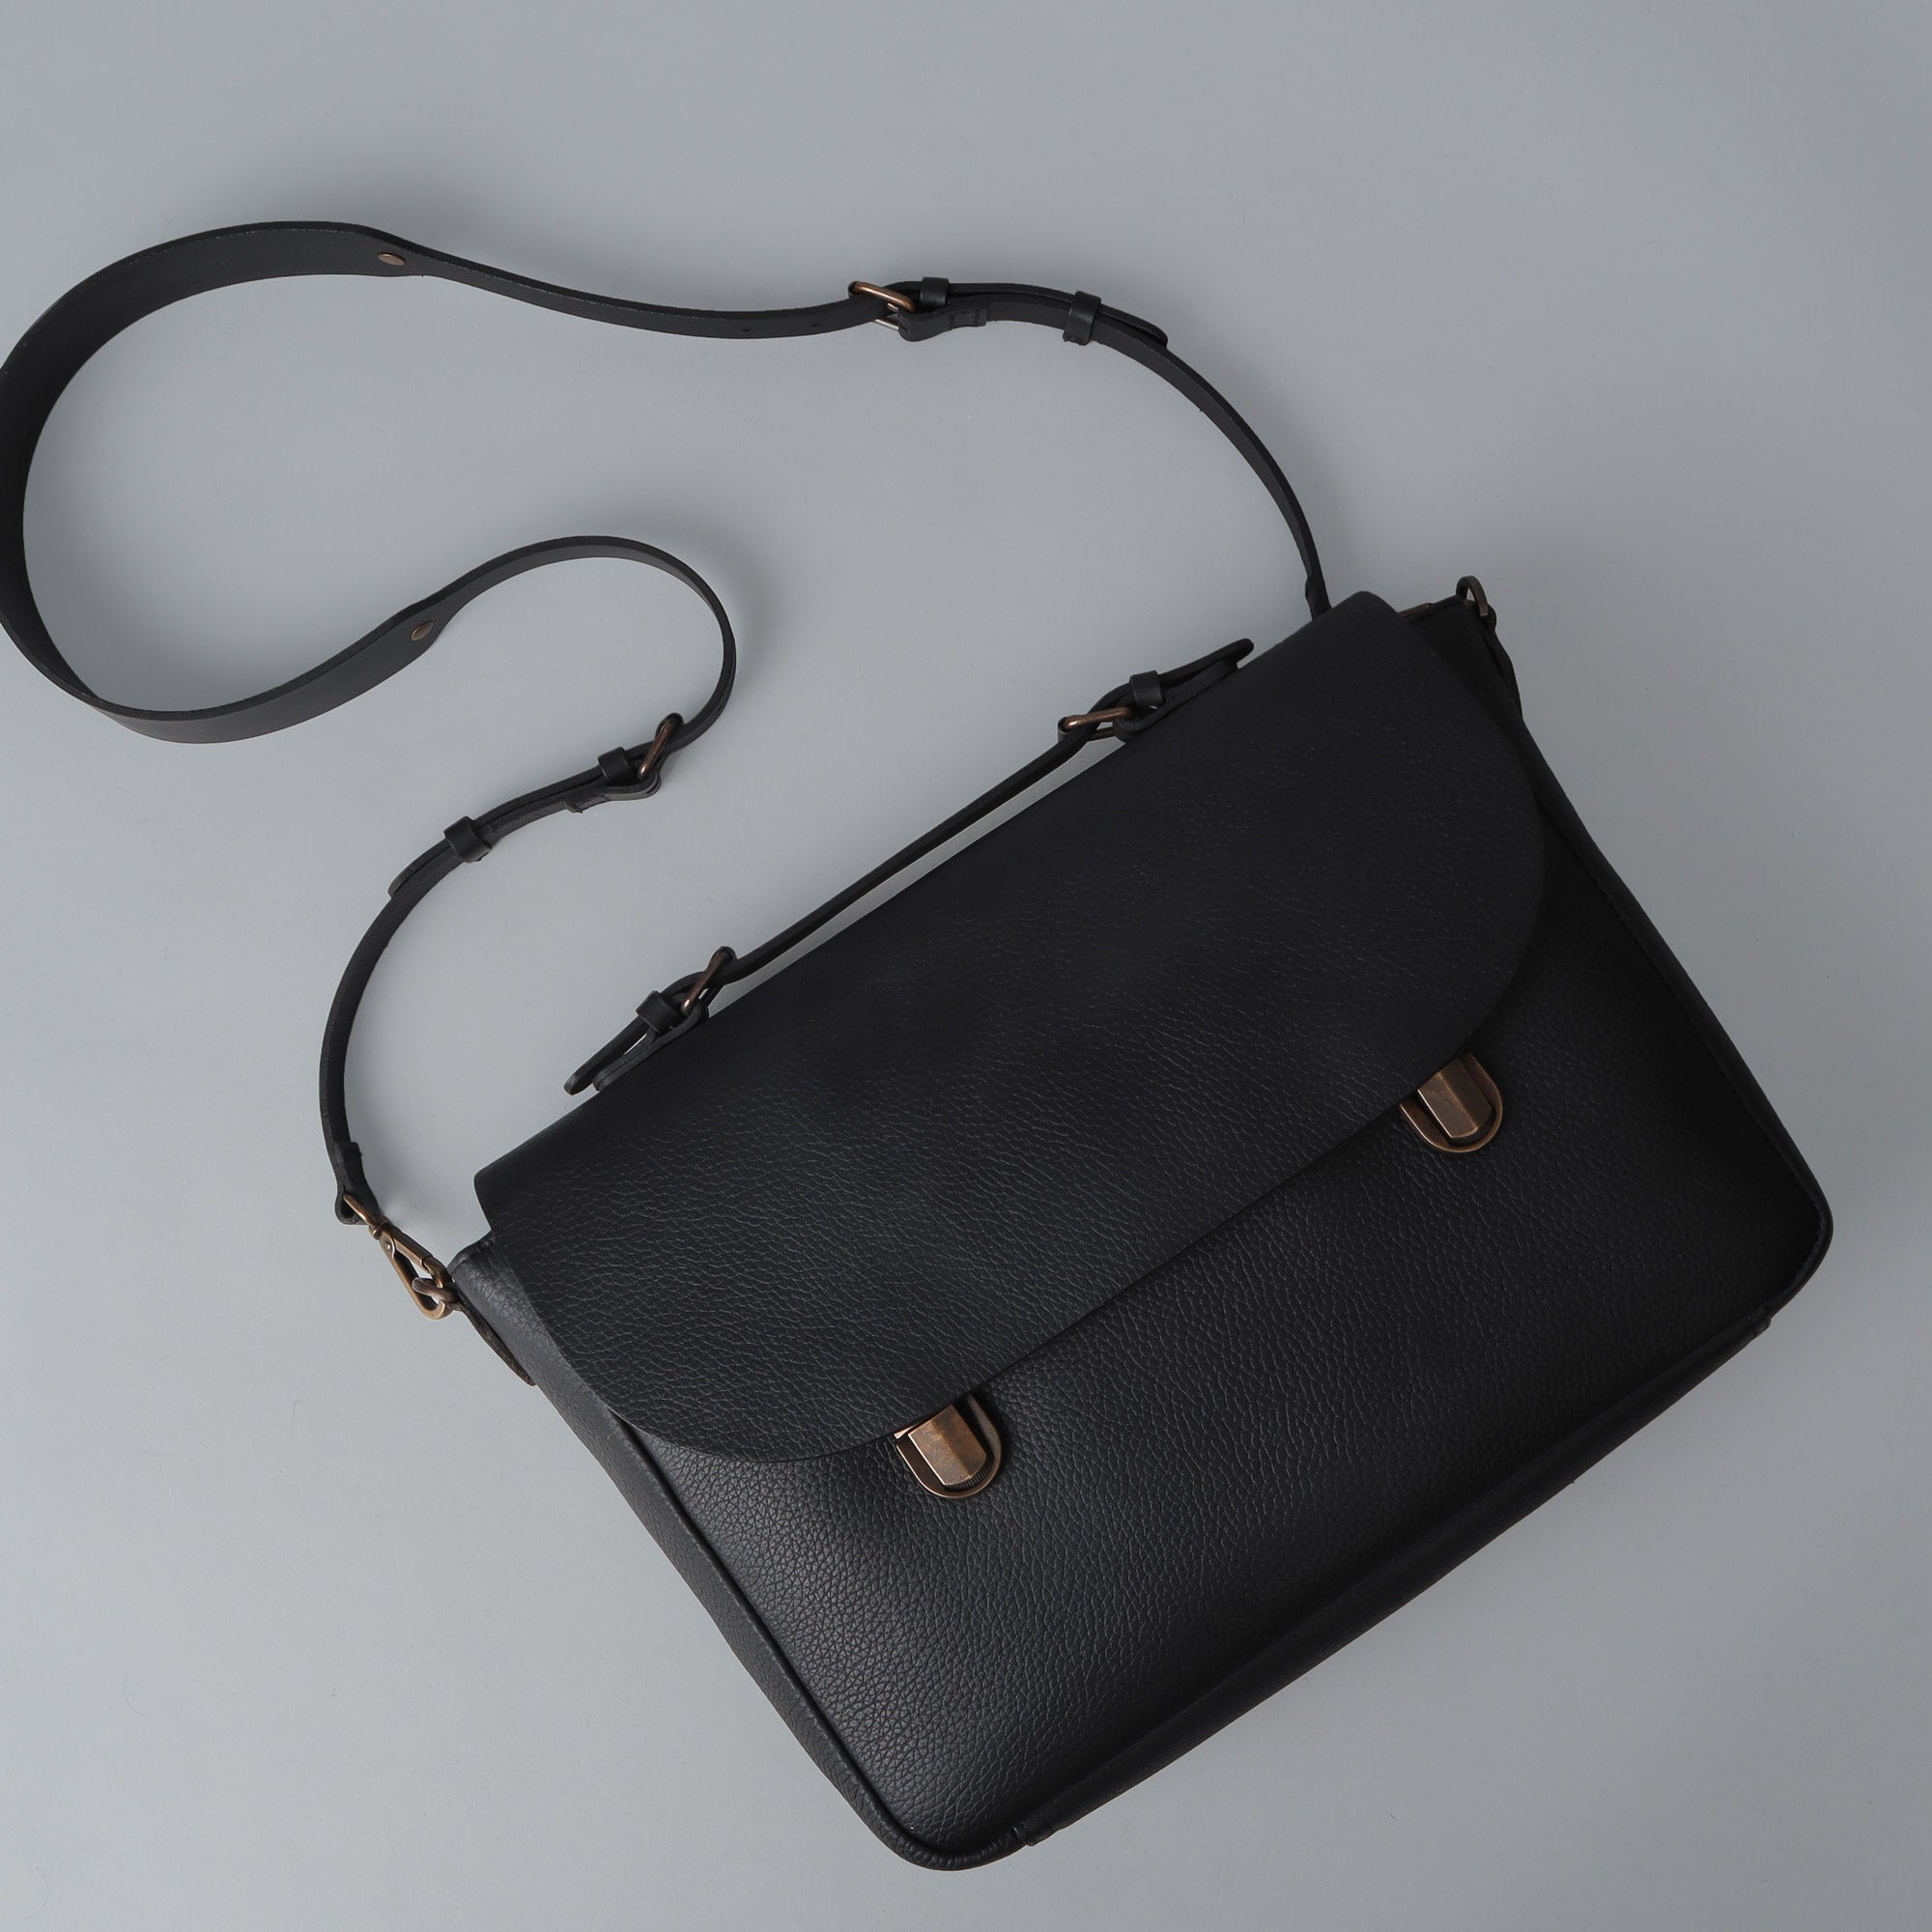 Designer leather briefcase